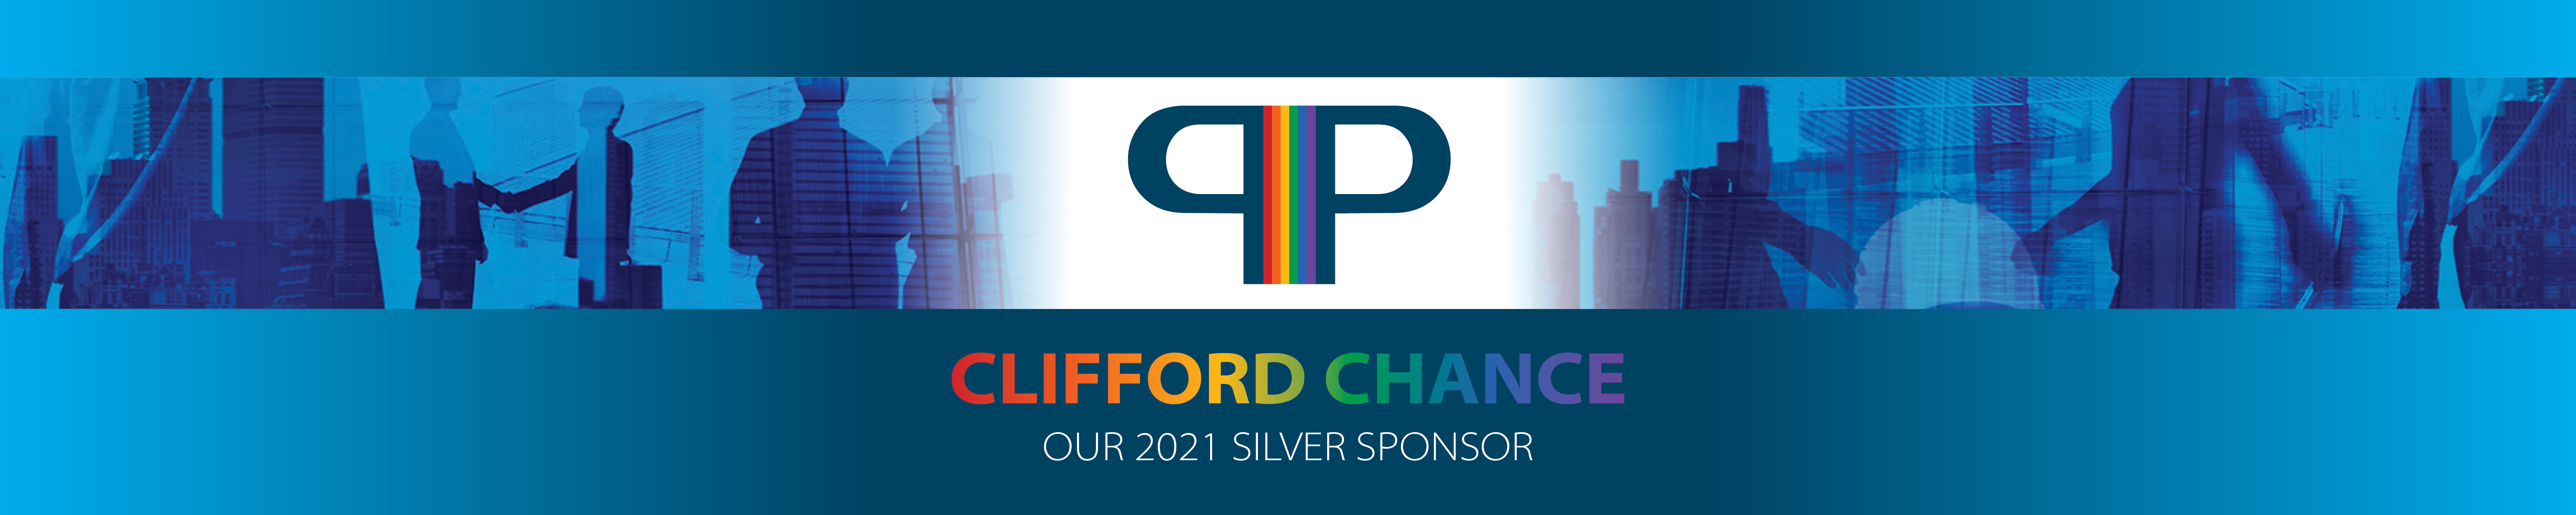 PIP_Sponsor_CliffordChance